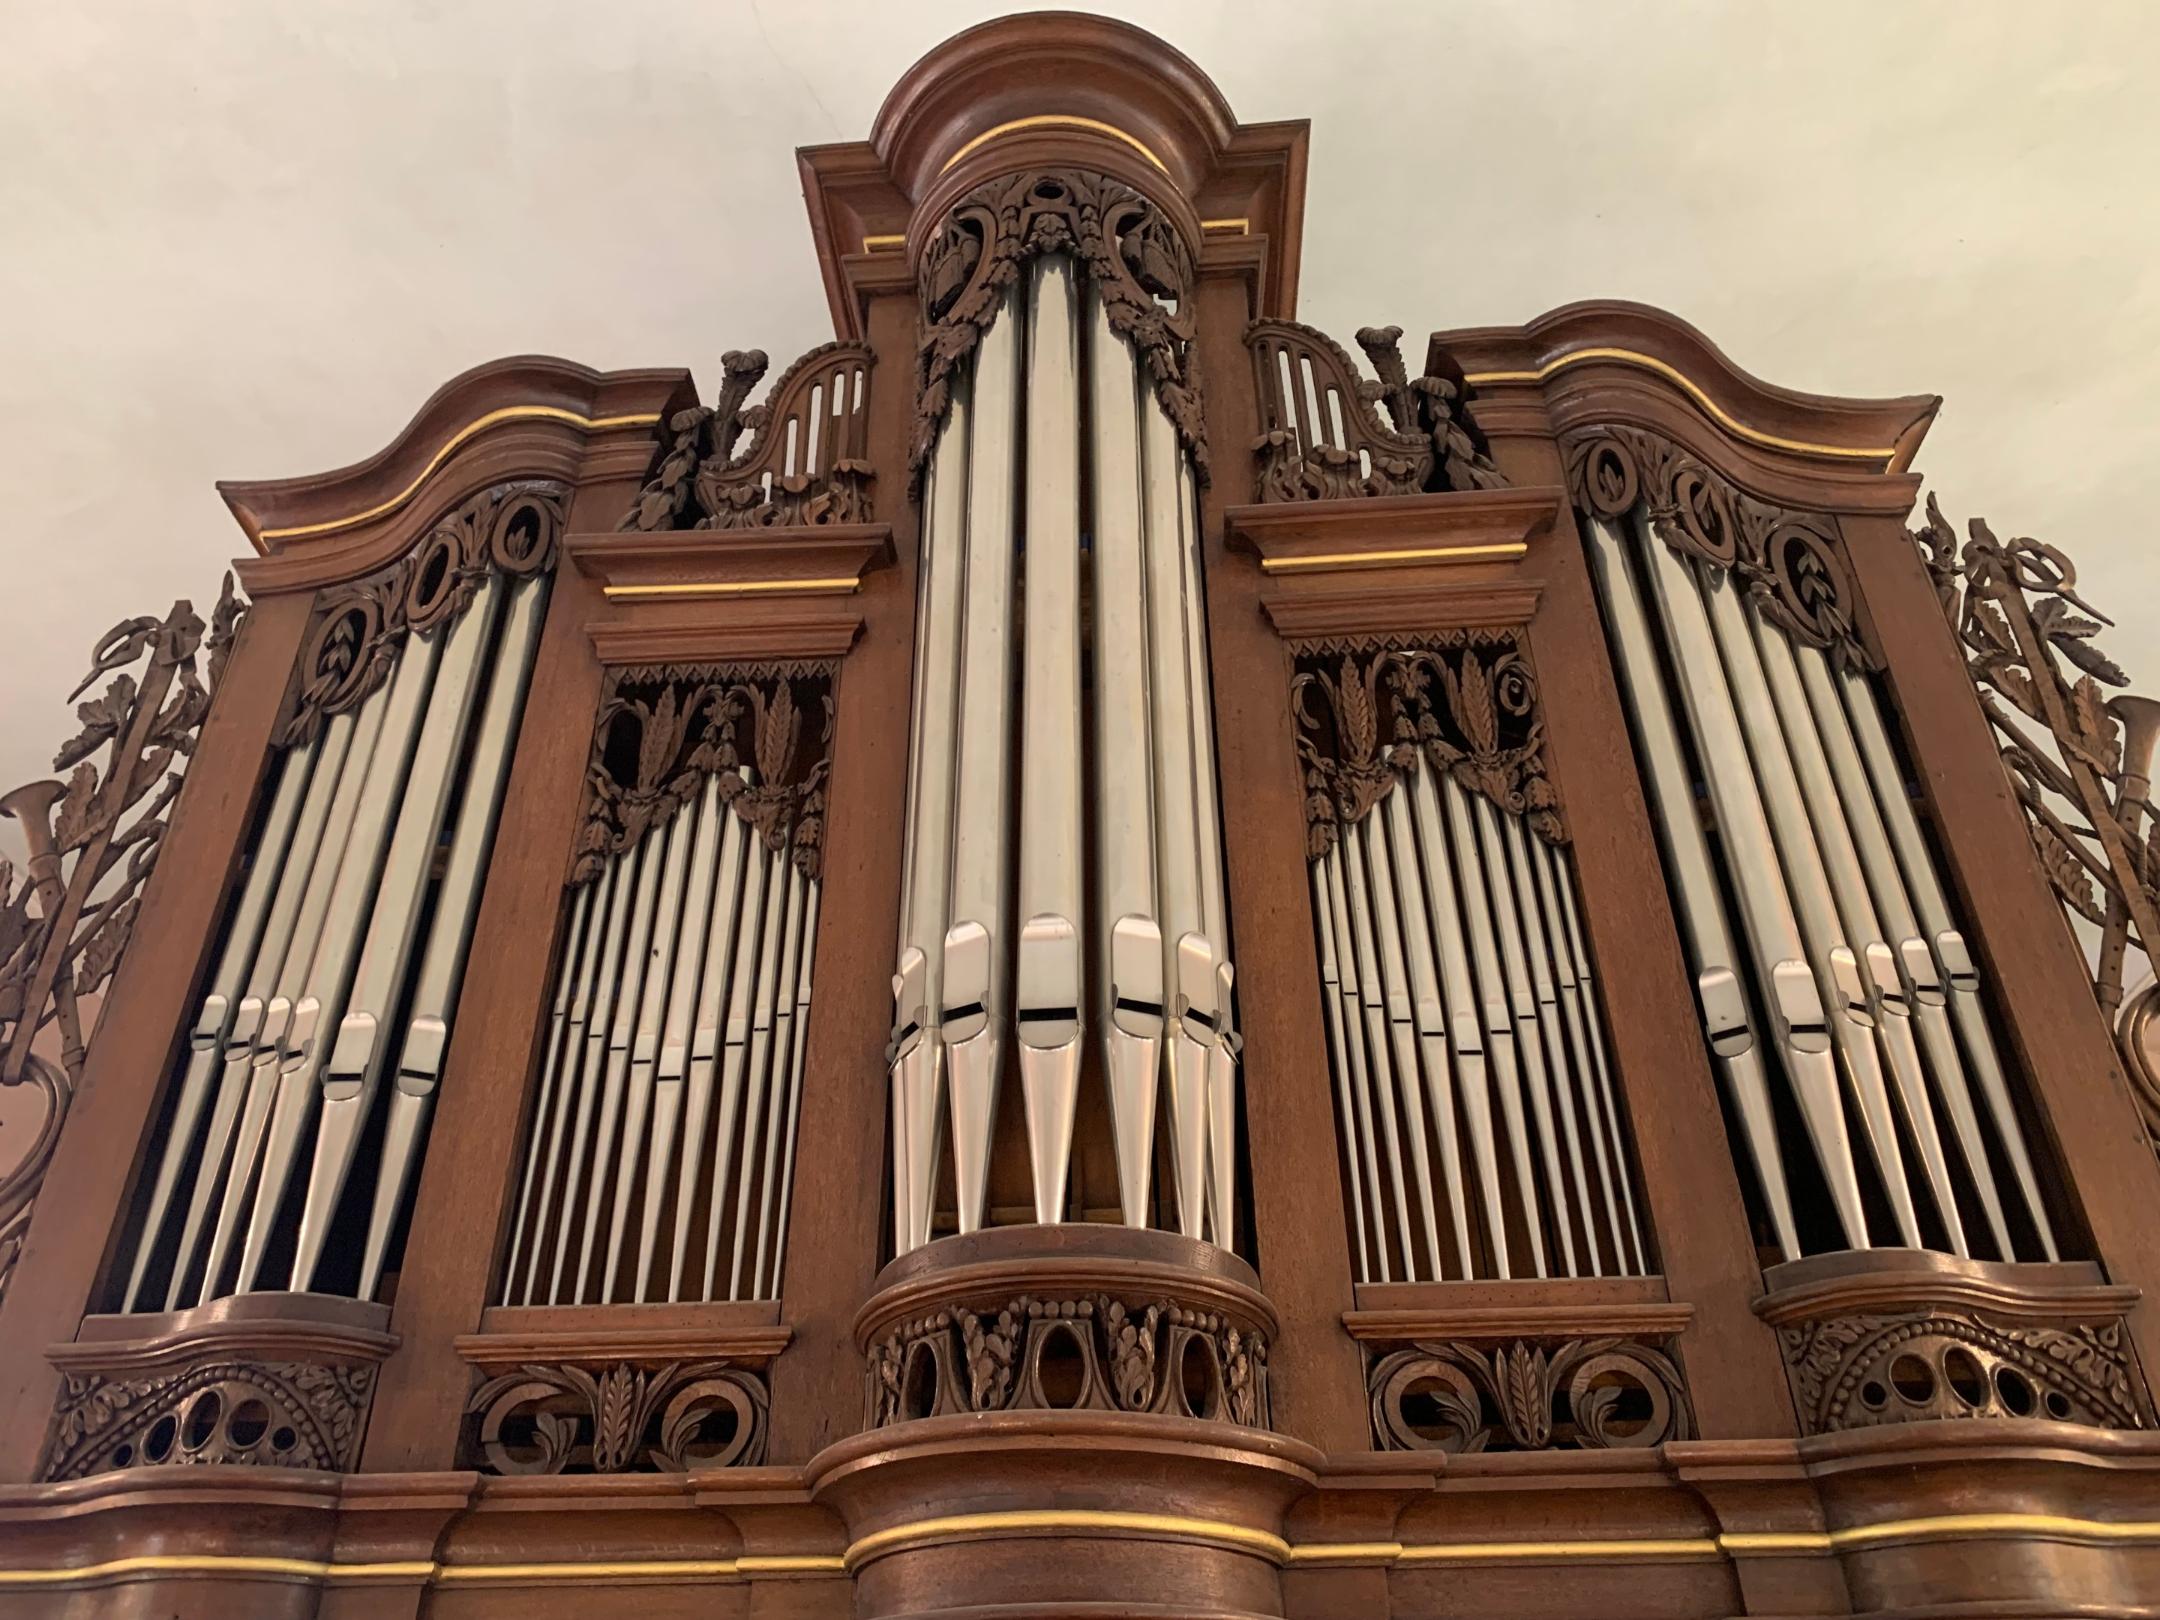 St. Jakobus Orgel heute